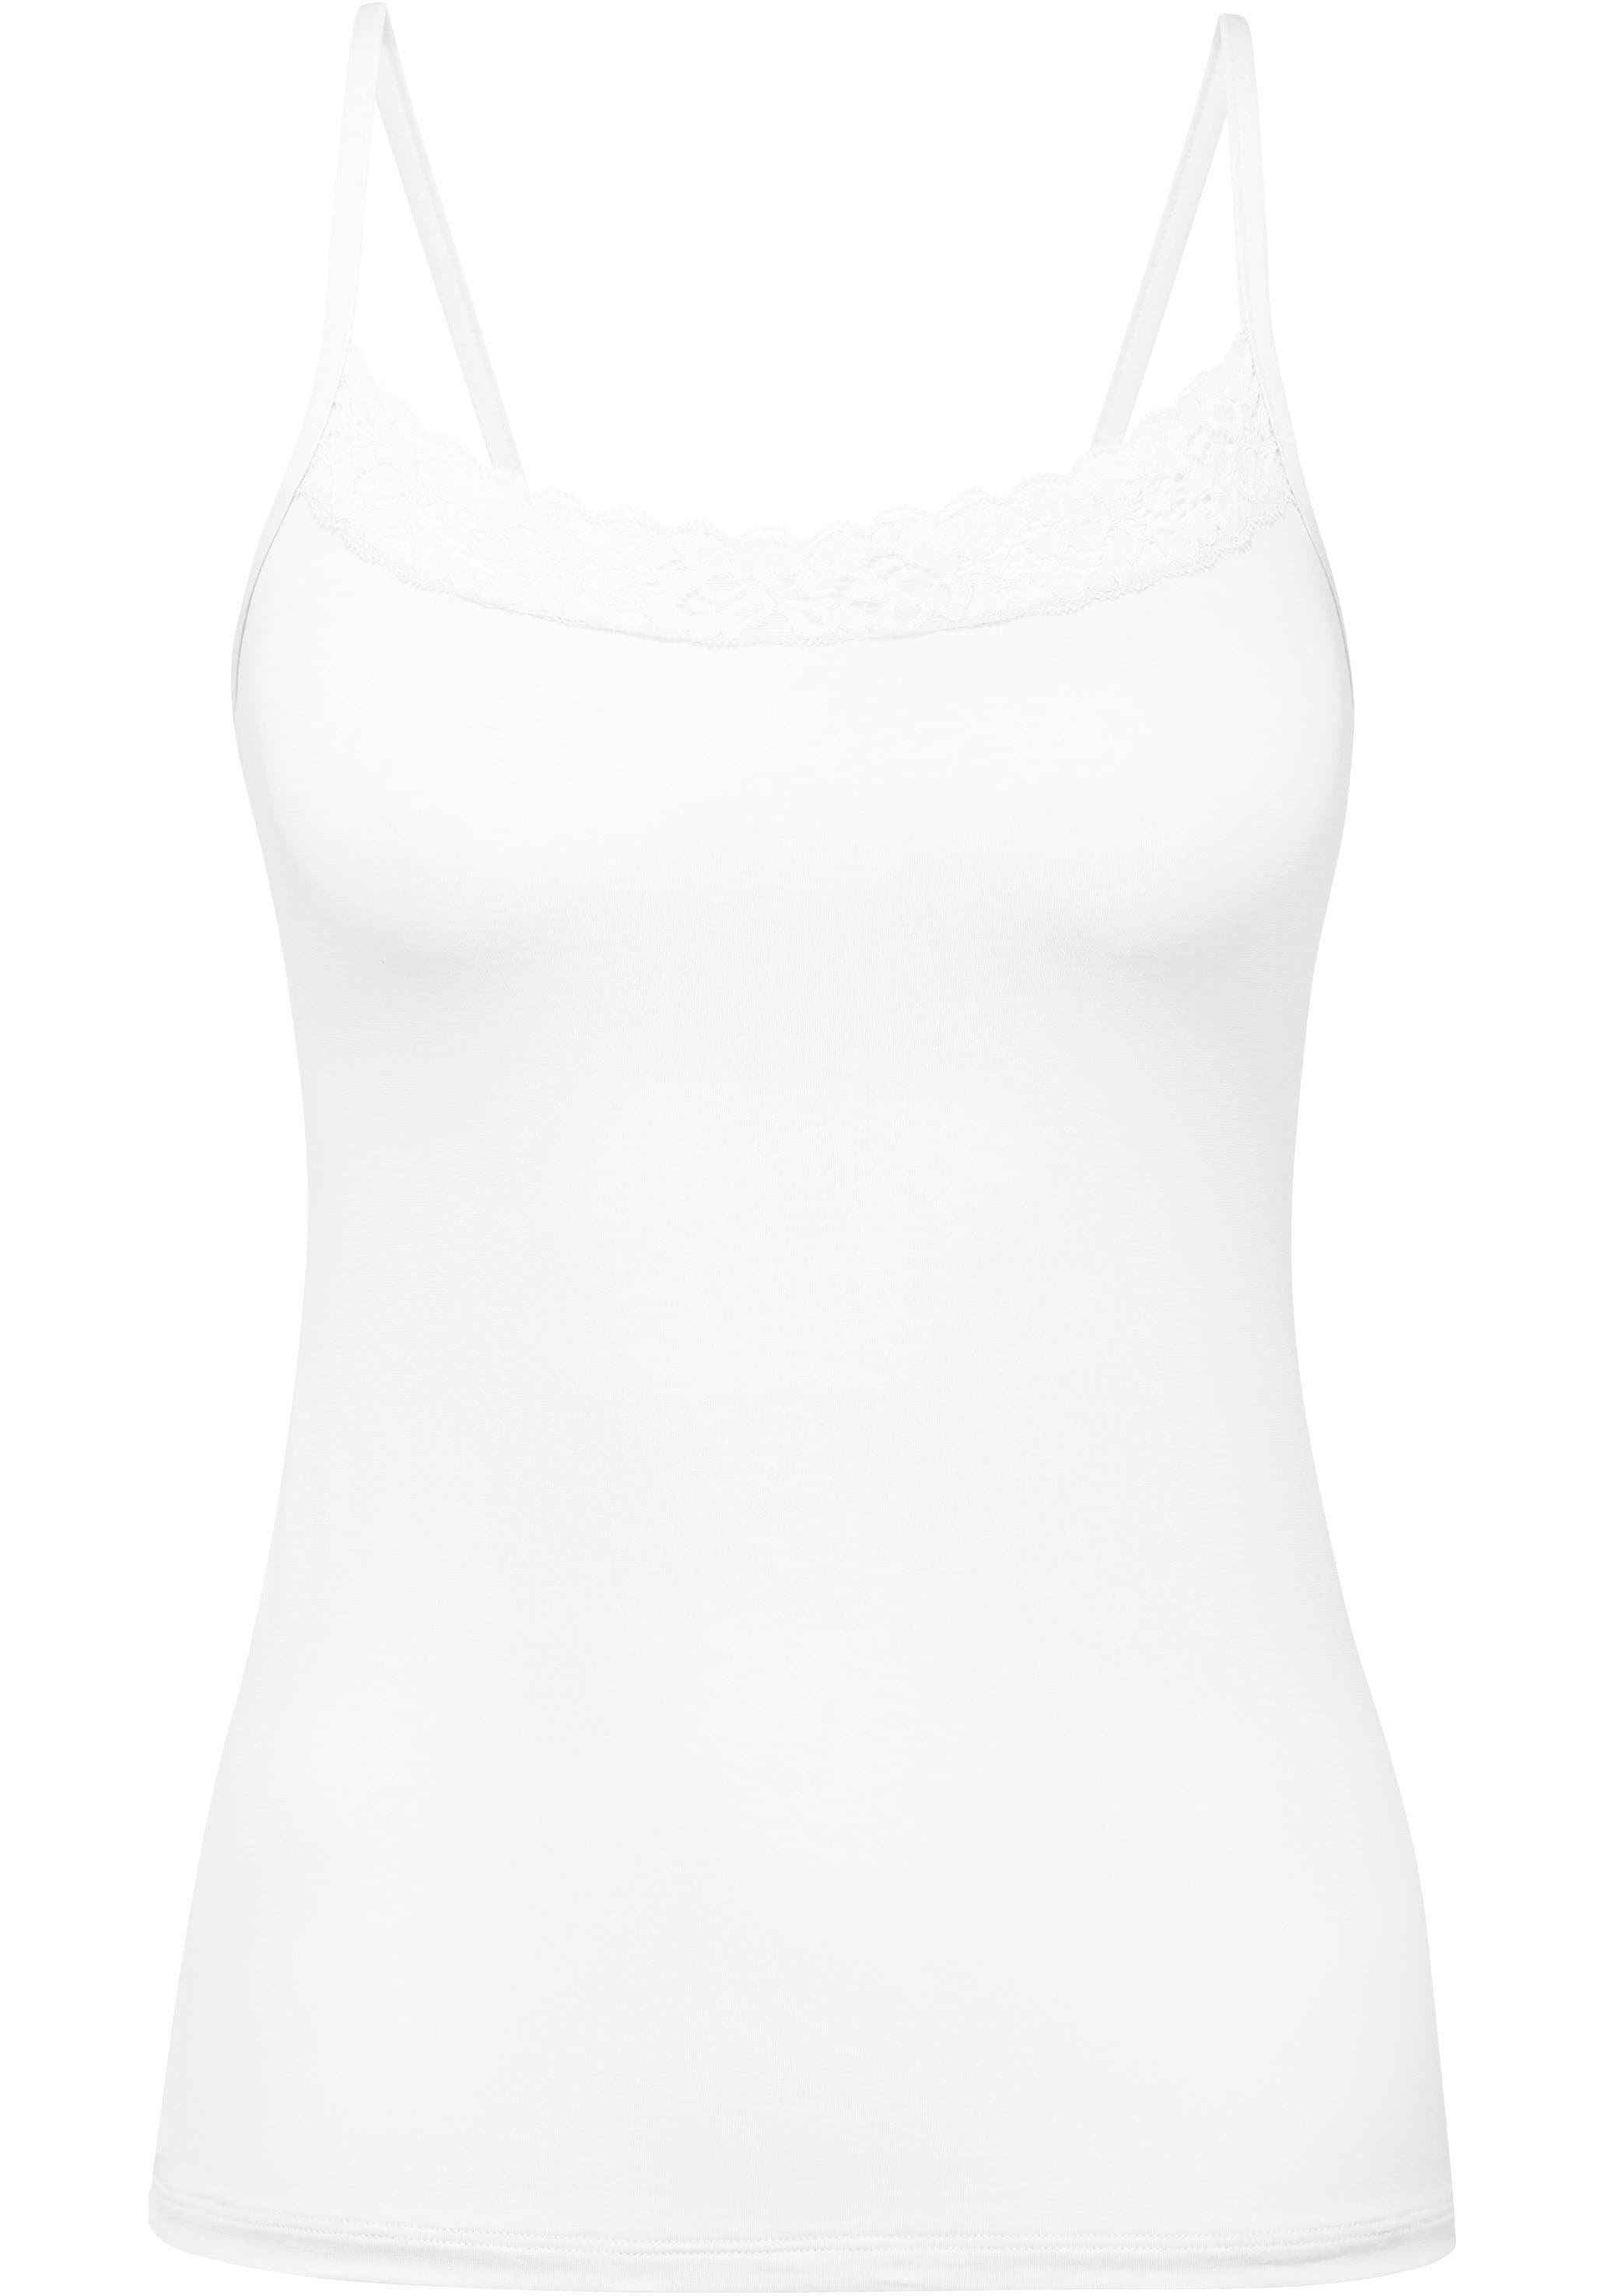 CALIDA Unterhemd »Natural Comfort Lace«, Top mit verstellbaren Trägern, zarter  Spitzen-Look online bestellen